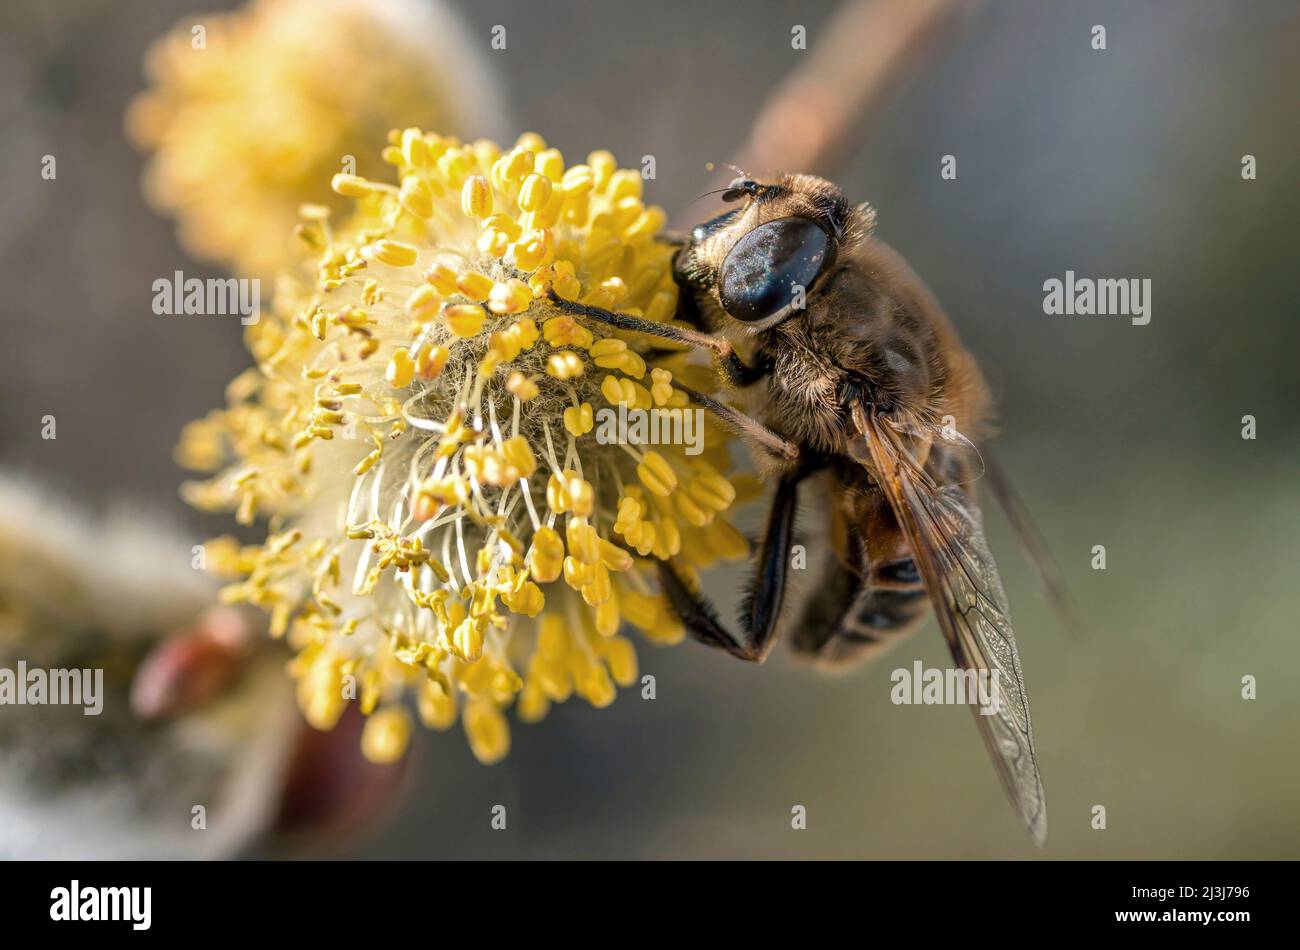 Western honey bee (Apis mellifera) pollinating a willow catkin (Salix caprea) Germany, Europe Stock Photo